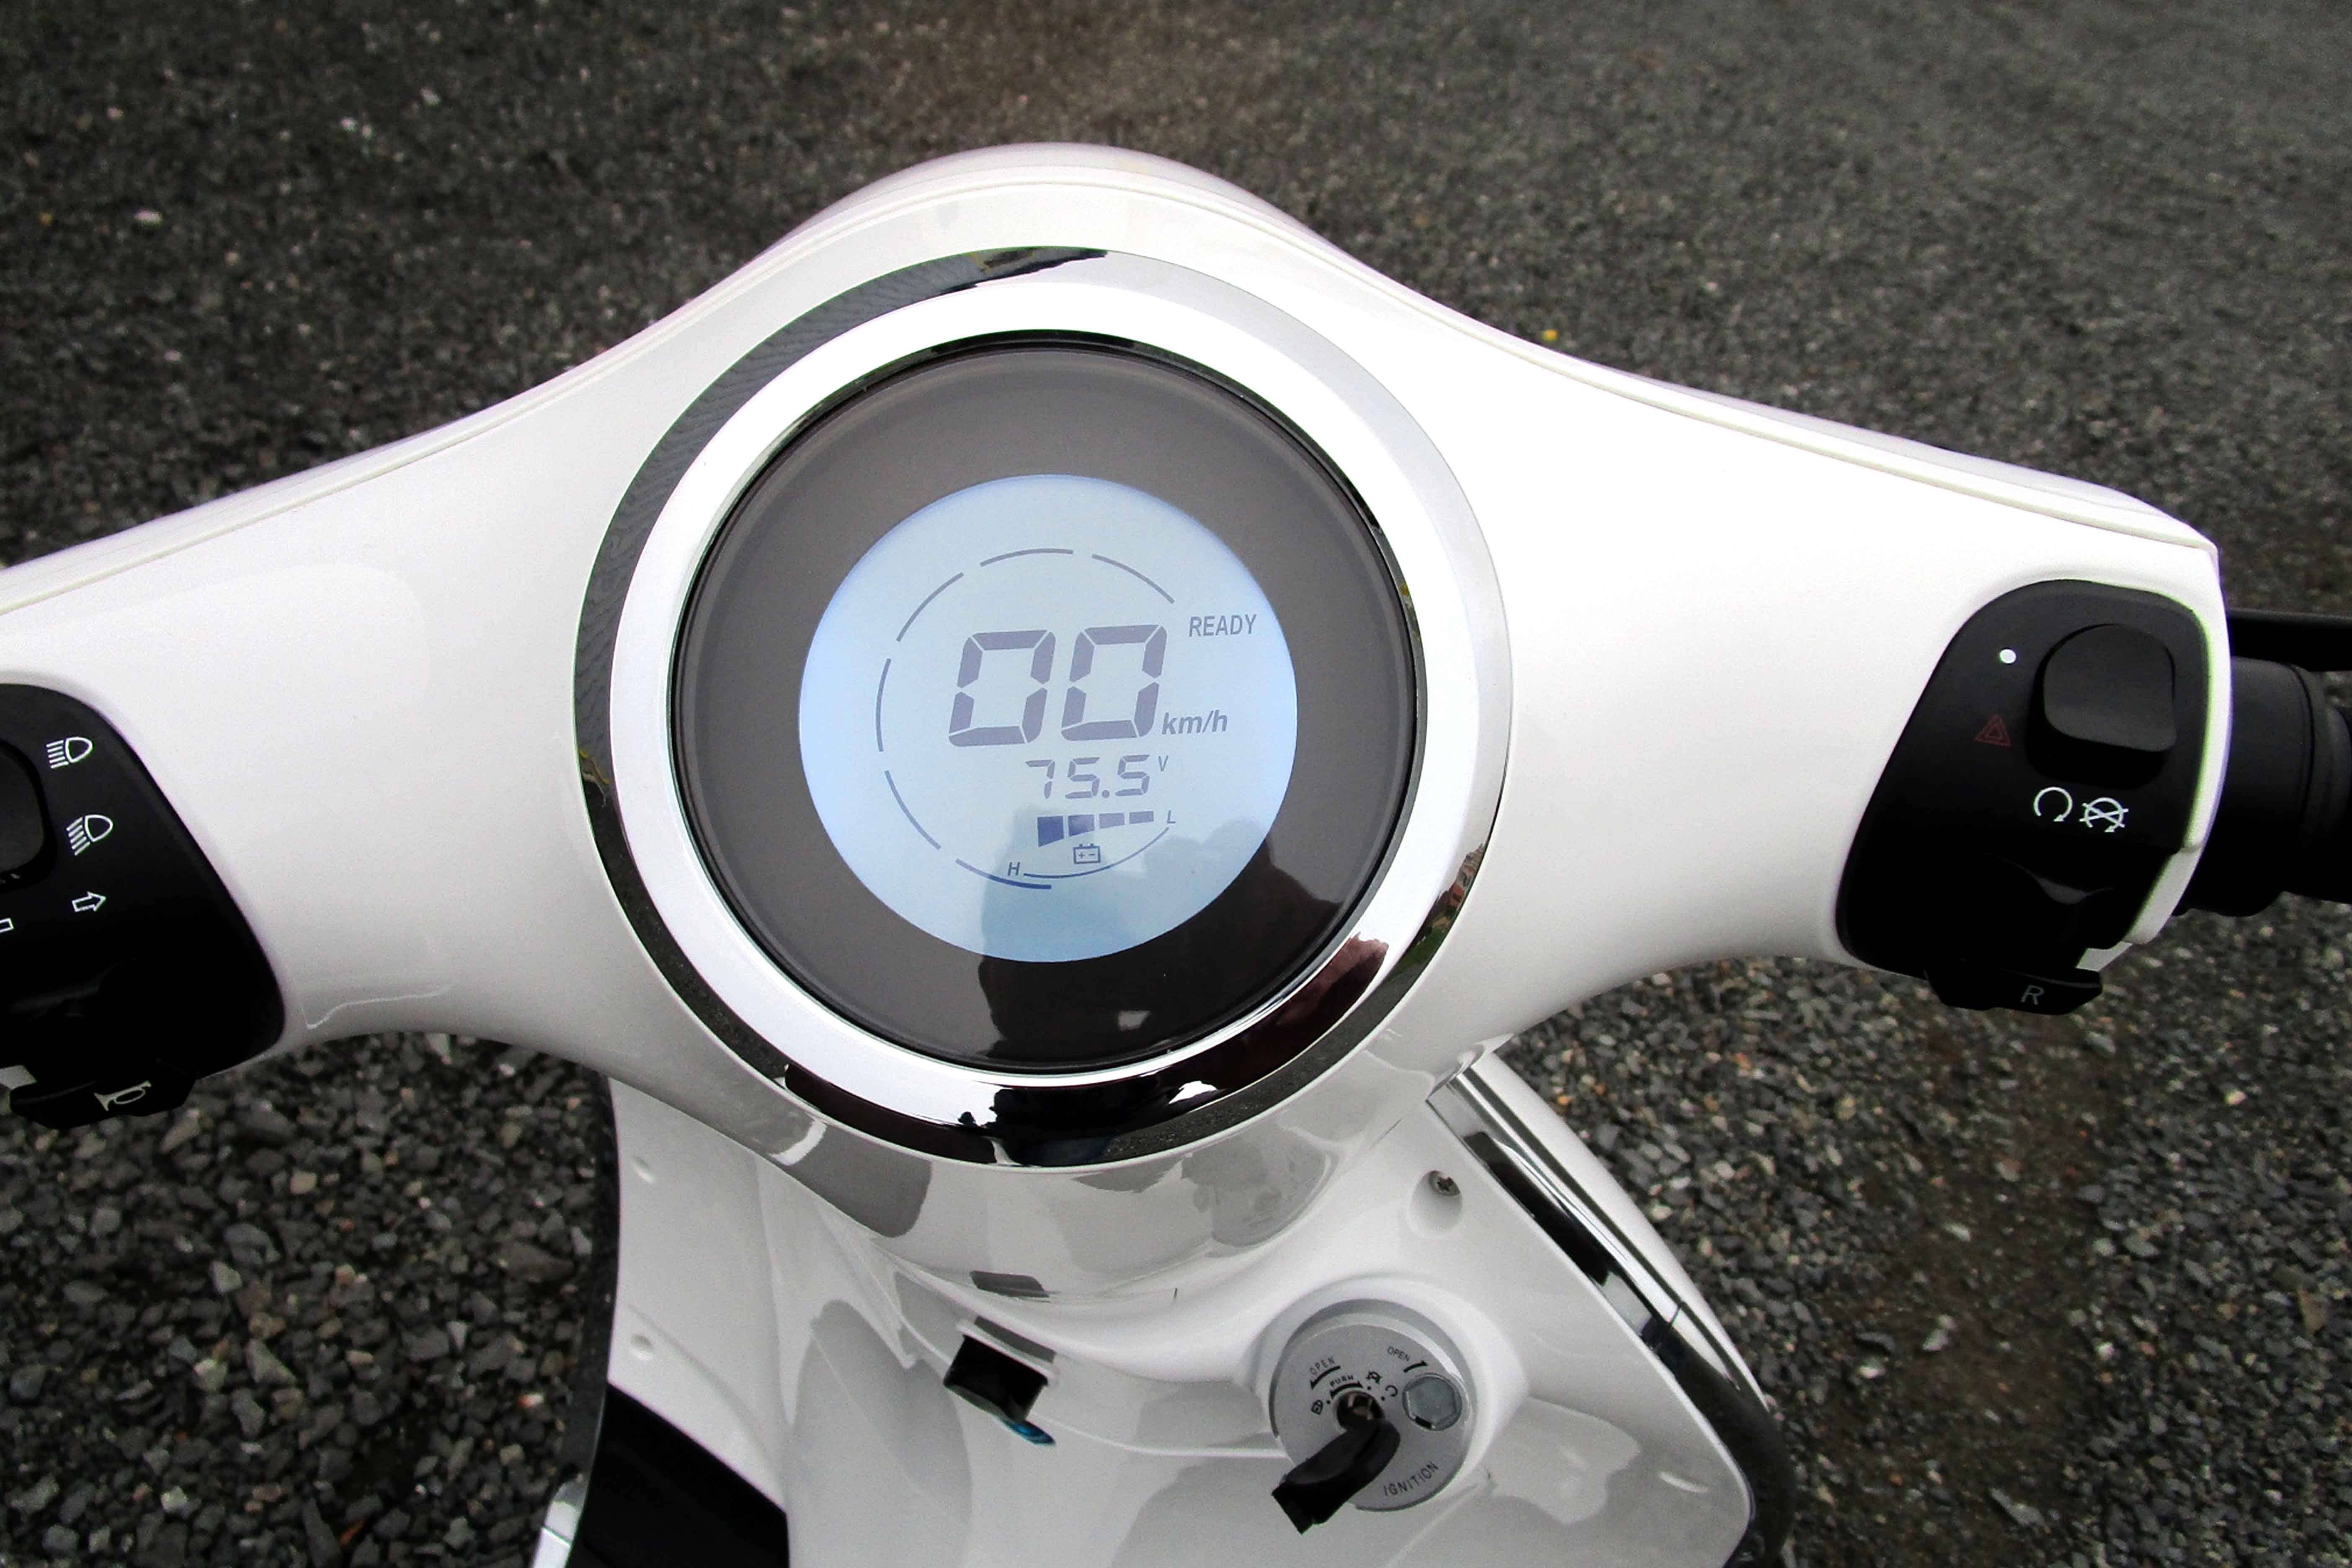 scooter électrique E-presto max